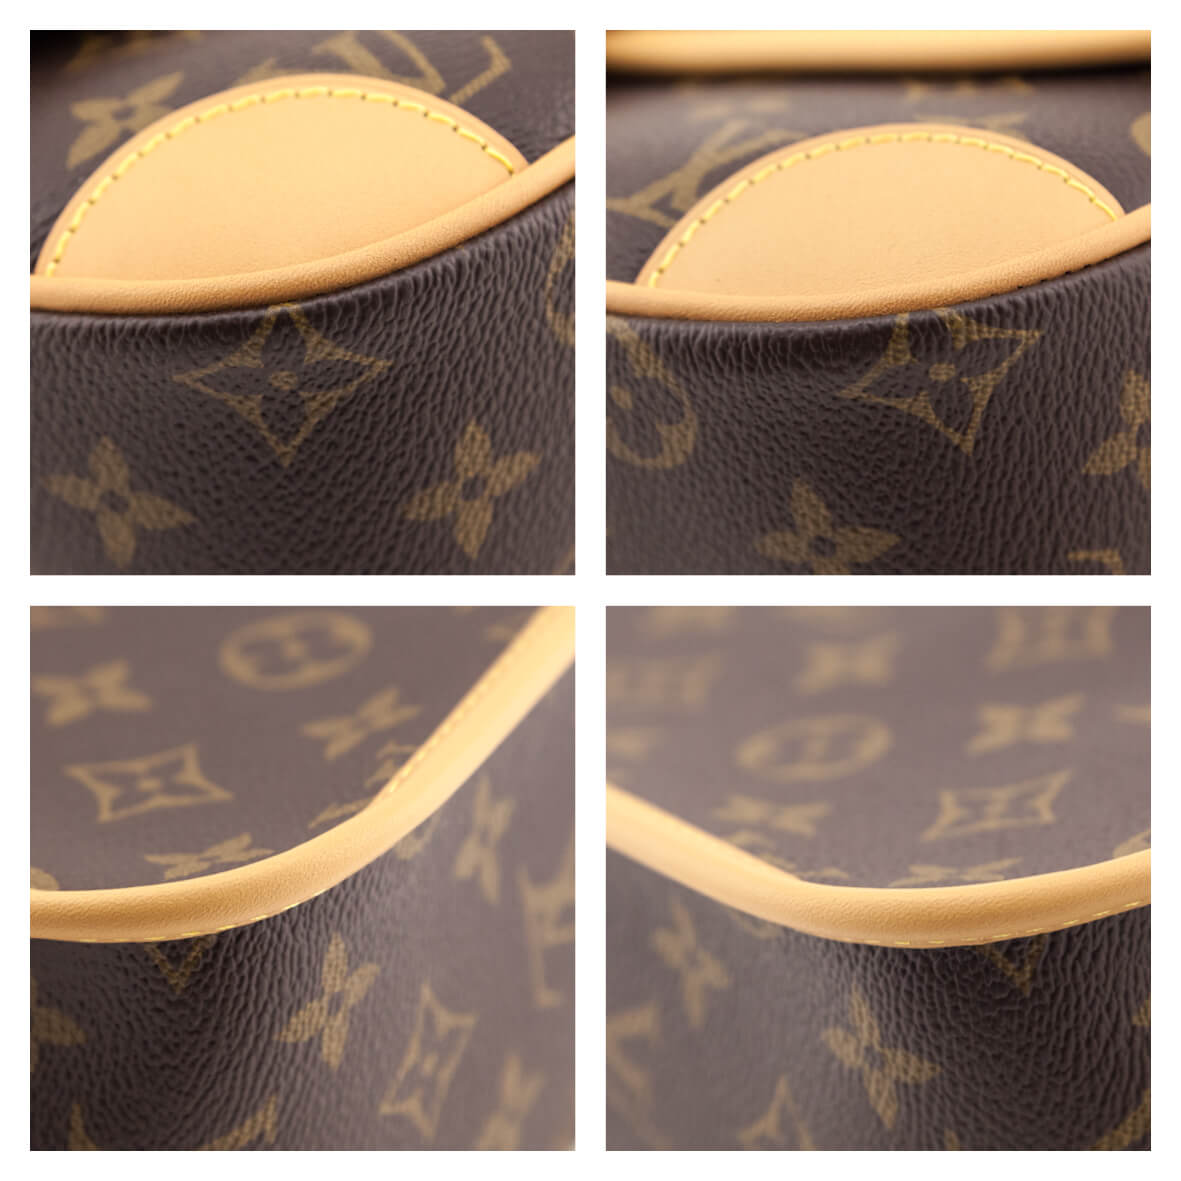 Louis Vuitton Monogram Diane Bag - Love that Bag etc - Preowned Authentic Designer Handbags & Preloved Fashions